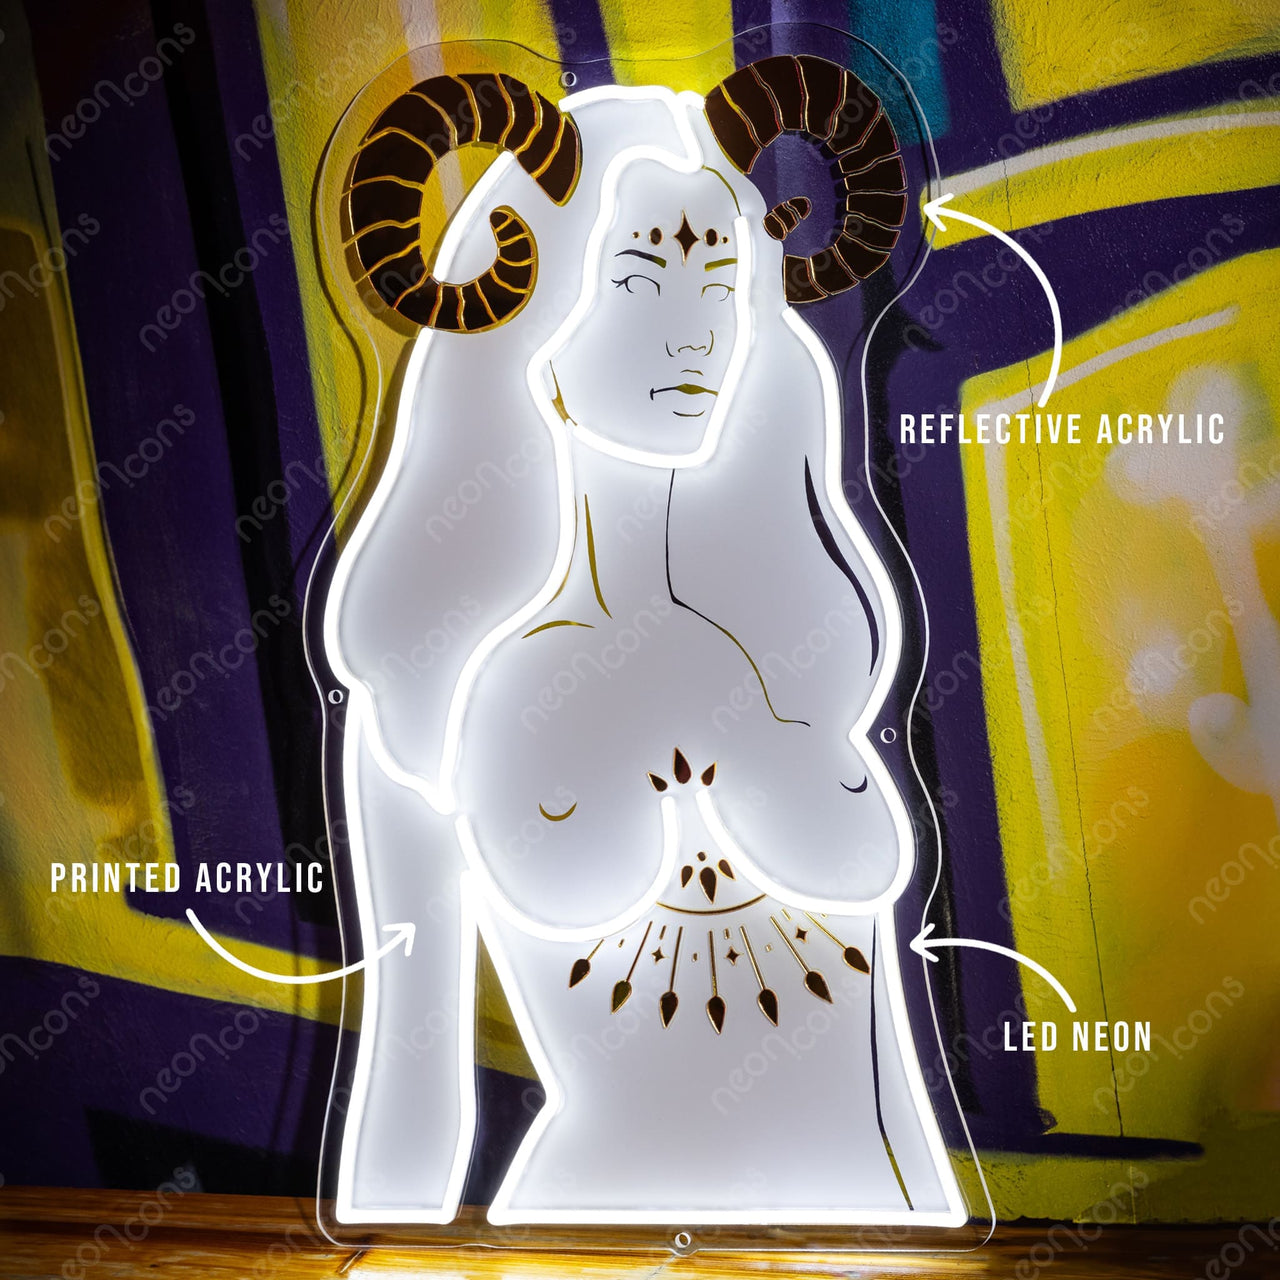 "Taurus Goddess" LED Neon x Print x Reflective Acrylic by Neon Icons